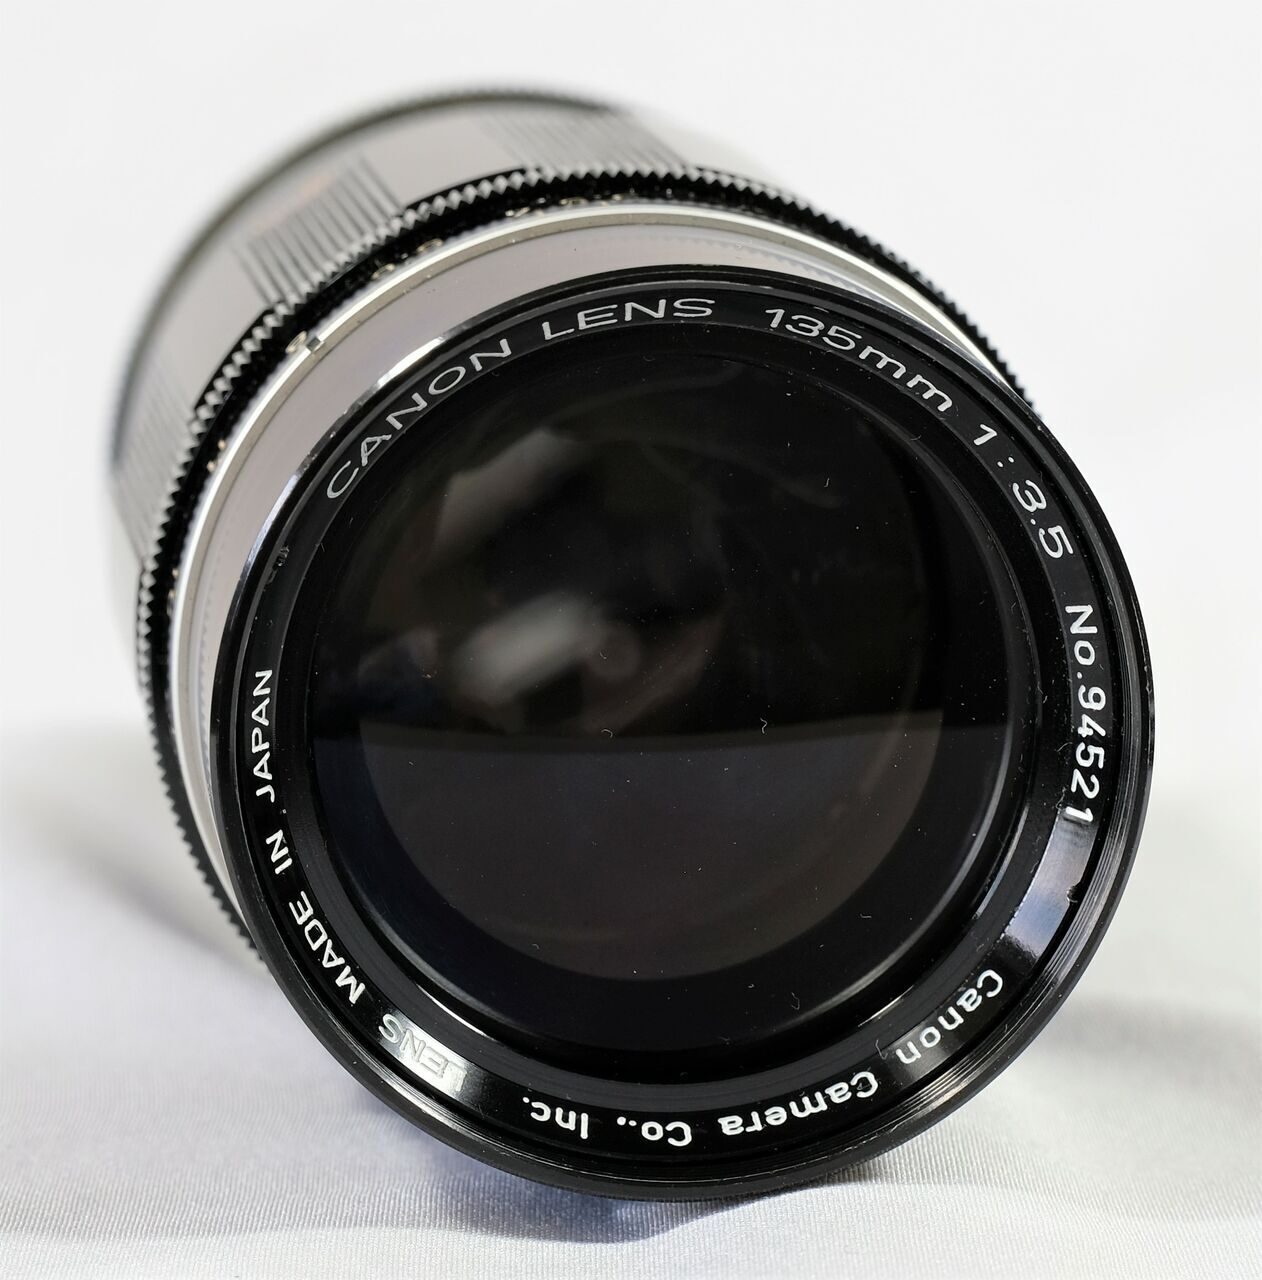 Canon Lens 135 mm 1:3.5 M 39